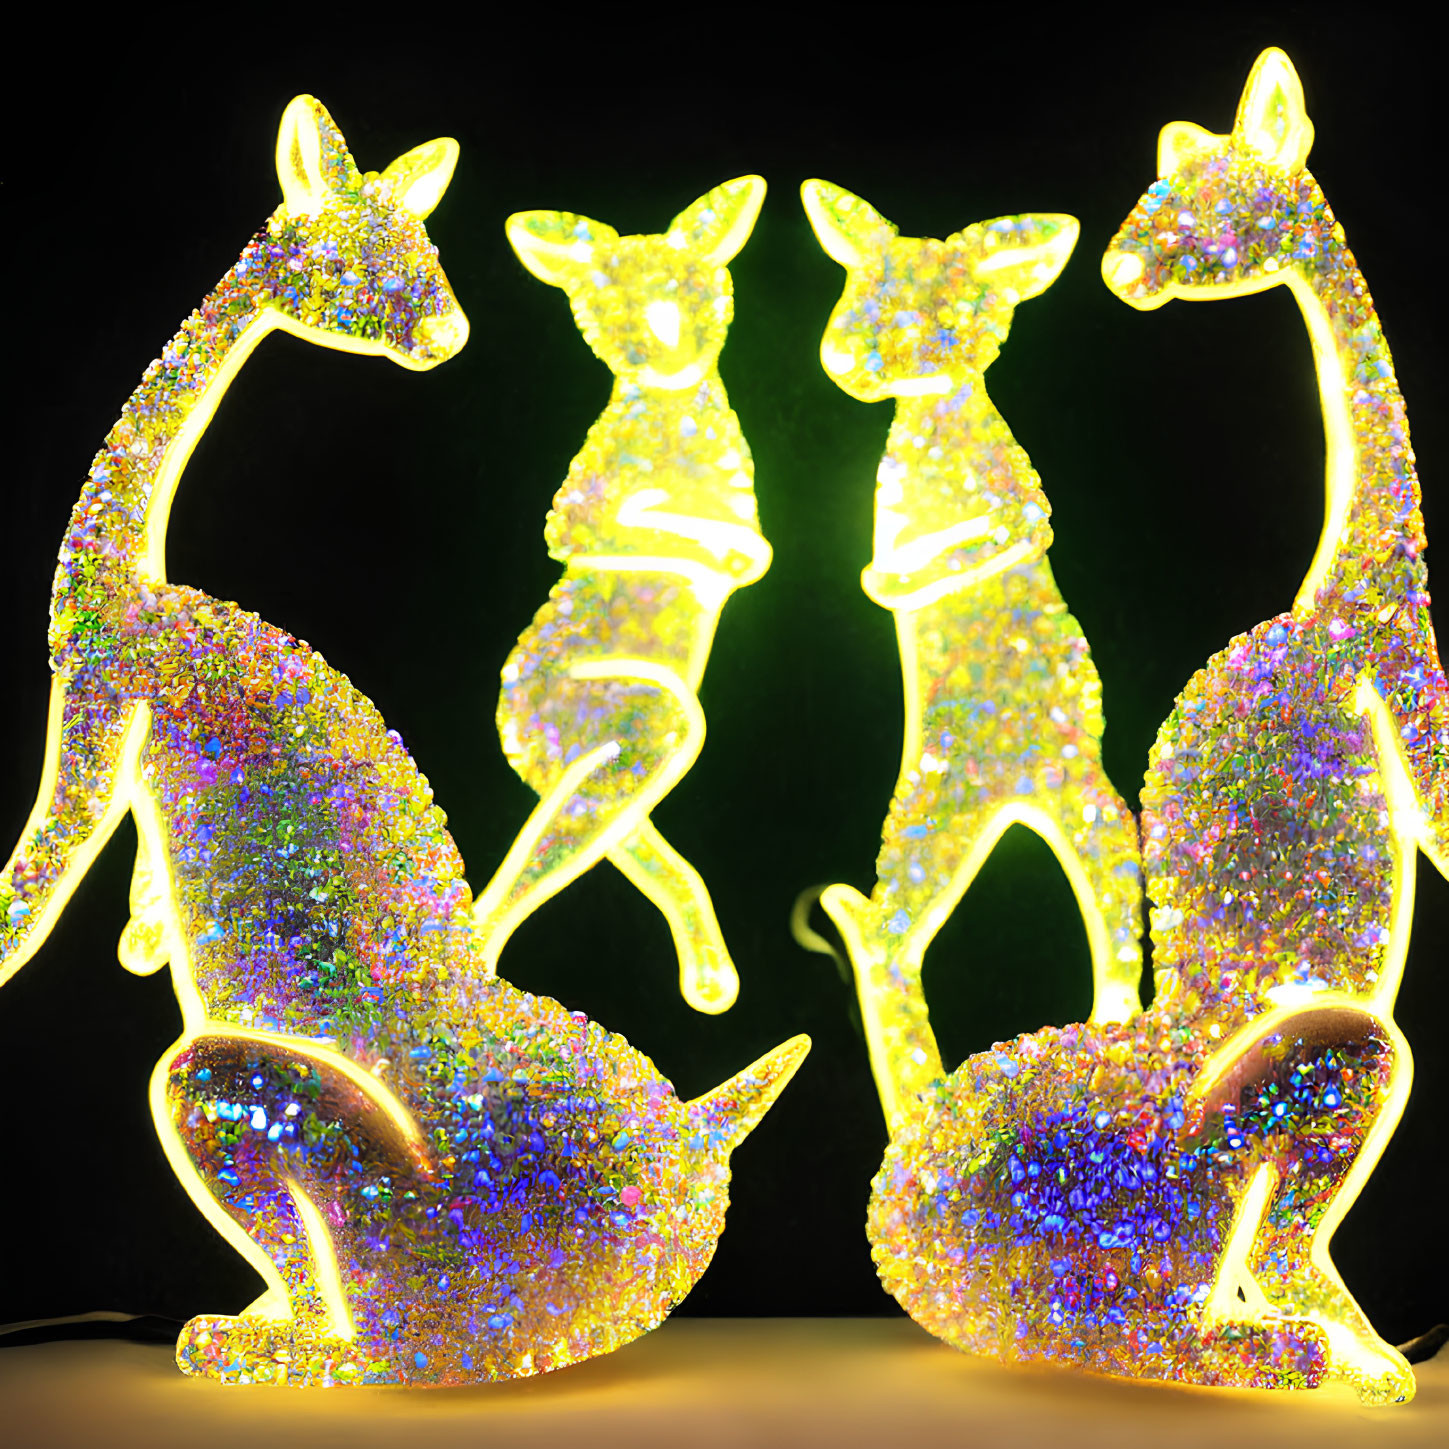 Four illuminated kangaroo figures with sparkling lights on dark background